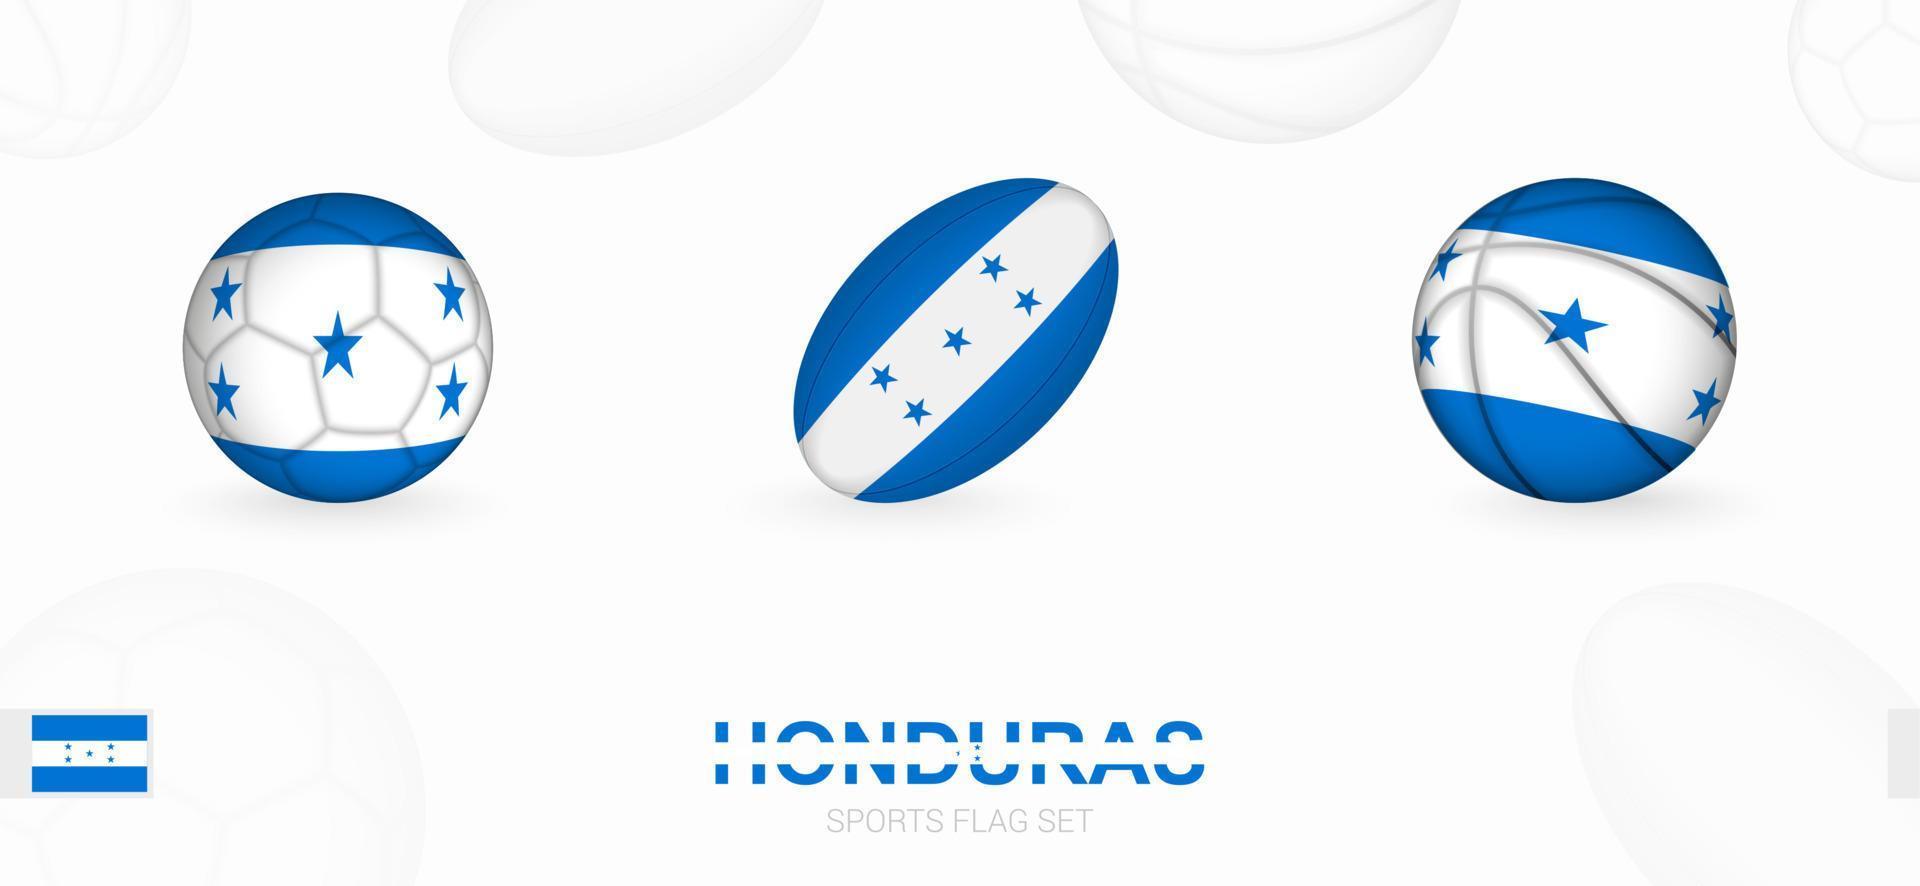 sport- pictogrammen voor Amerikaans voetbal, rugby en basketbal met de vlag van Honduras. vector